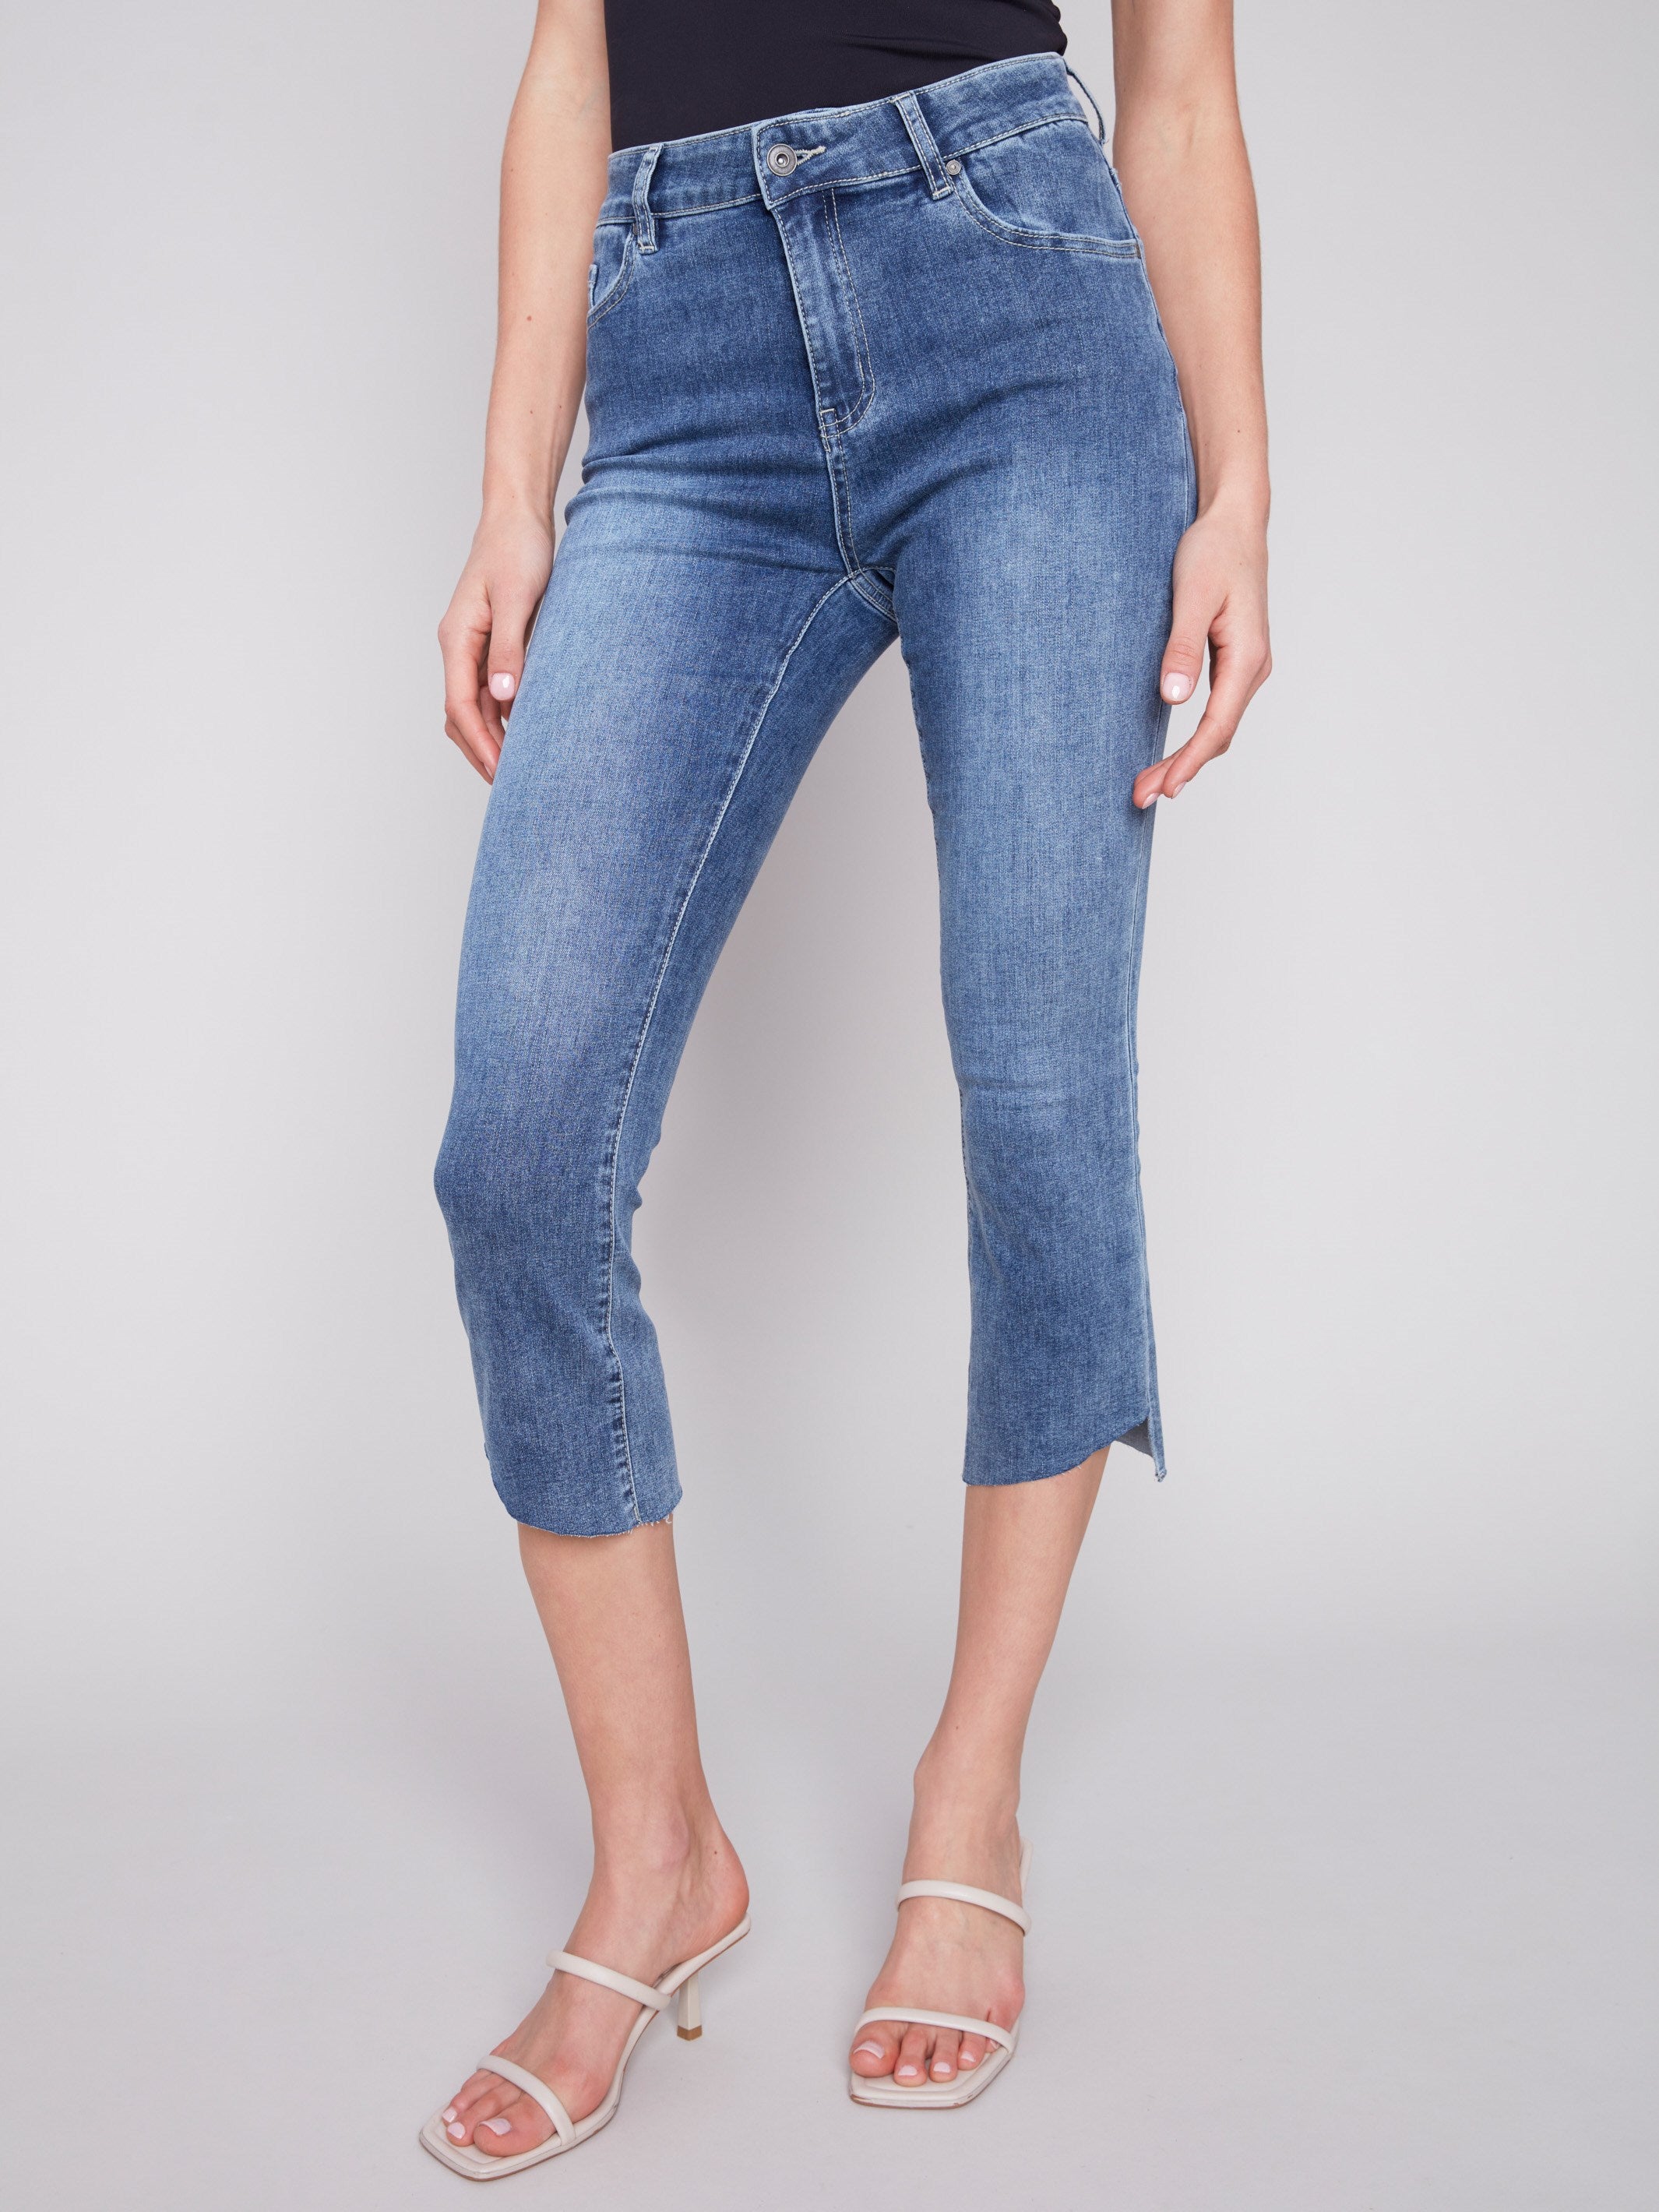 Charlie B Cropped Bootcut Jeans with Asymmetrical Hem - Medium Blue - Image 2